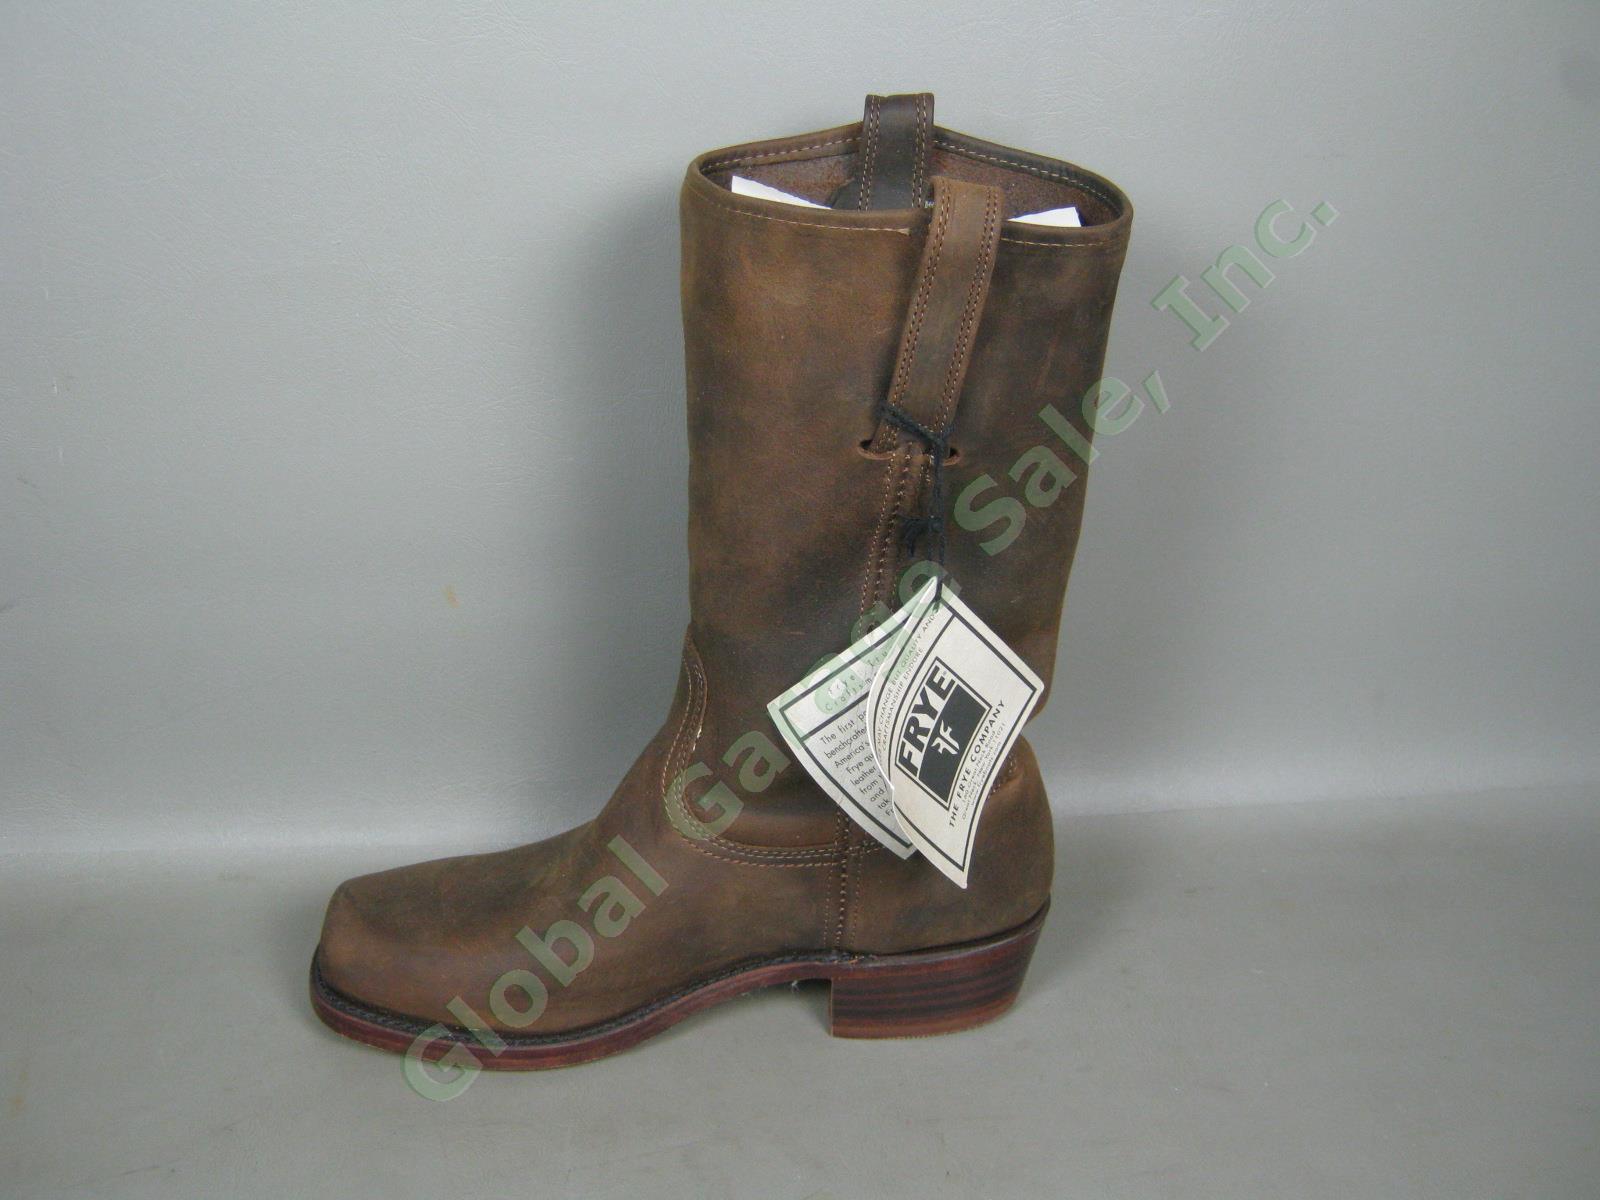 Mens Frye Cavalry 12L Tan Leather Boots Worn Once 9.5 Medium Width W/Box 87410-1 3